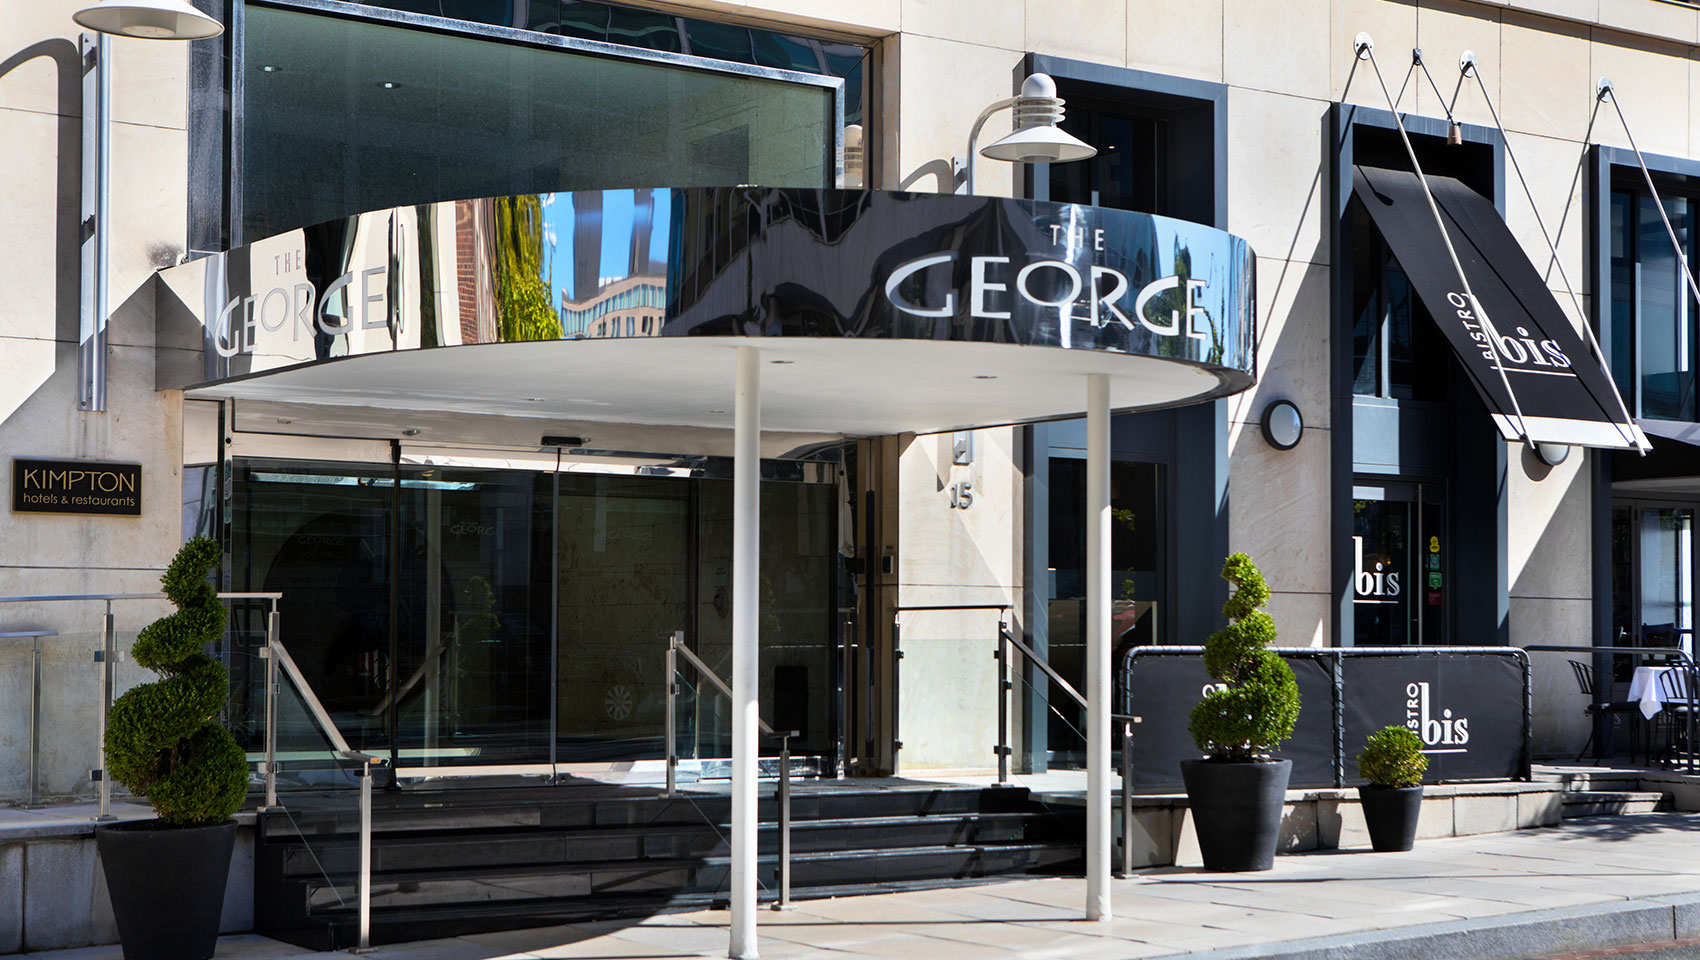 George Hotel Entrance